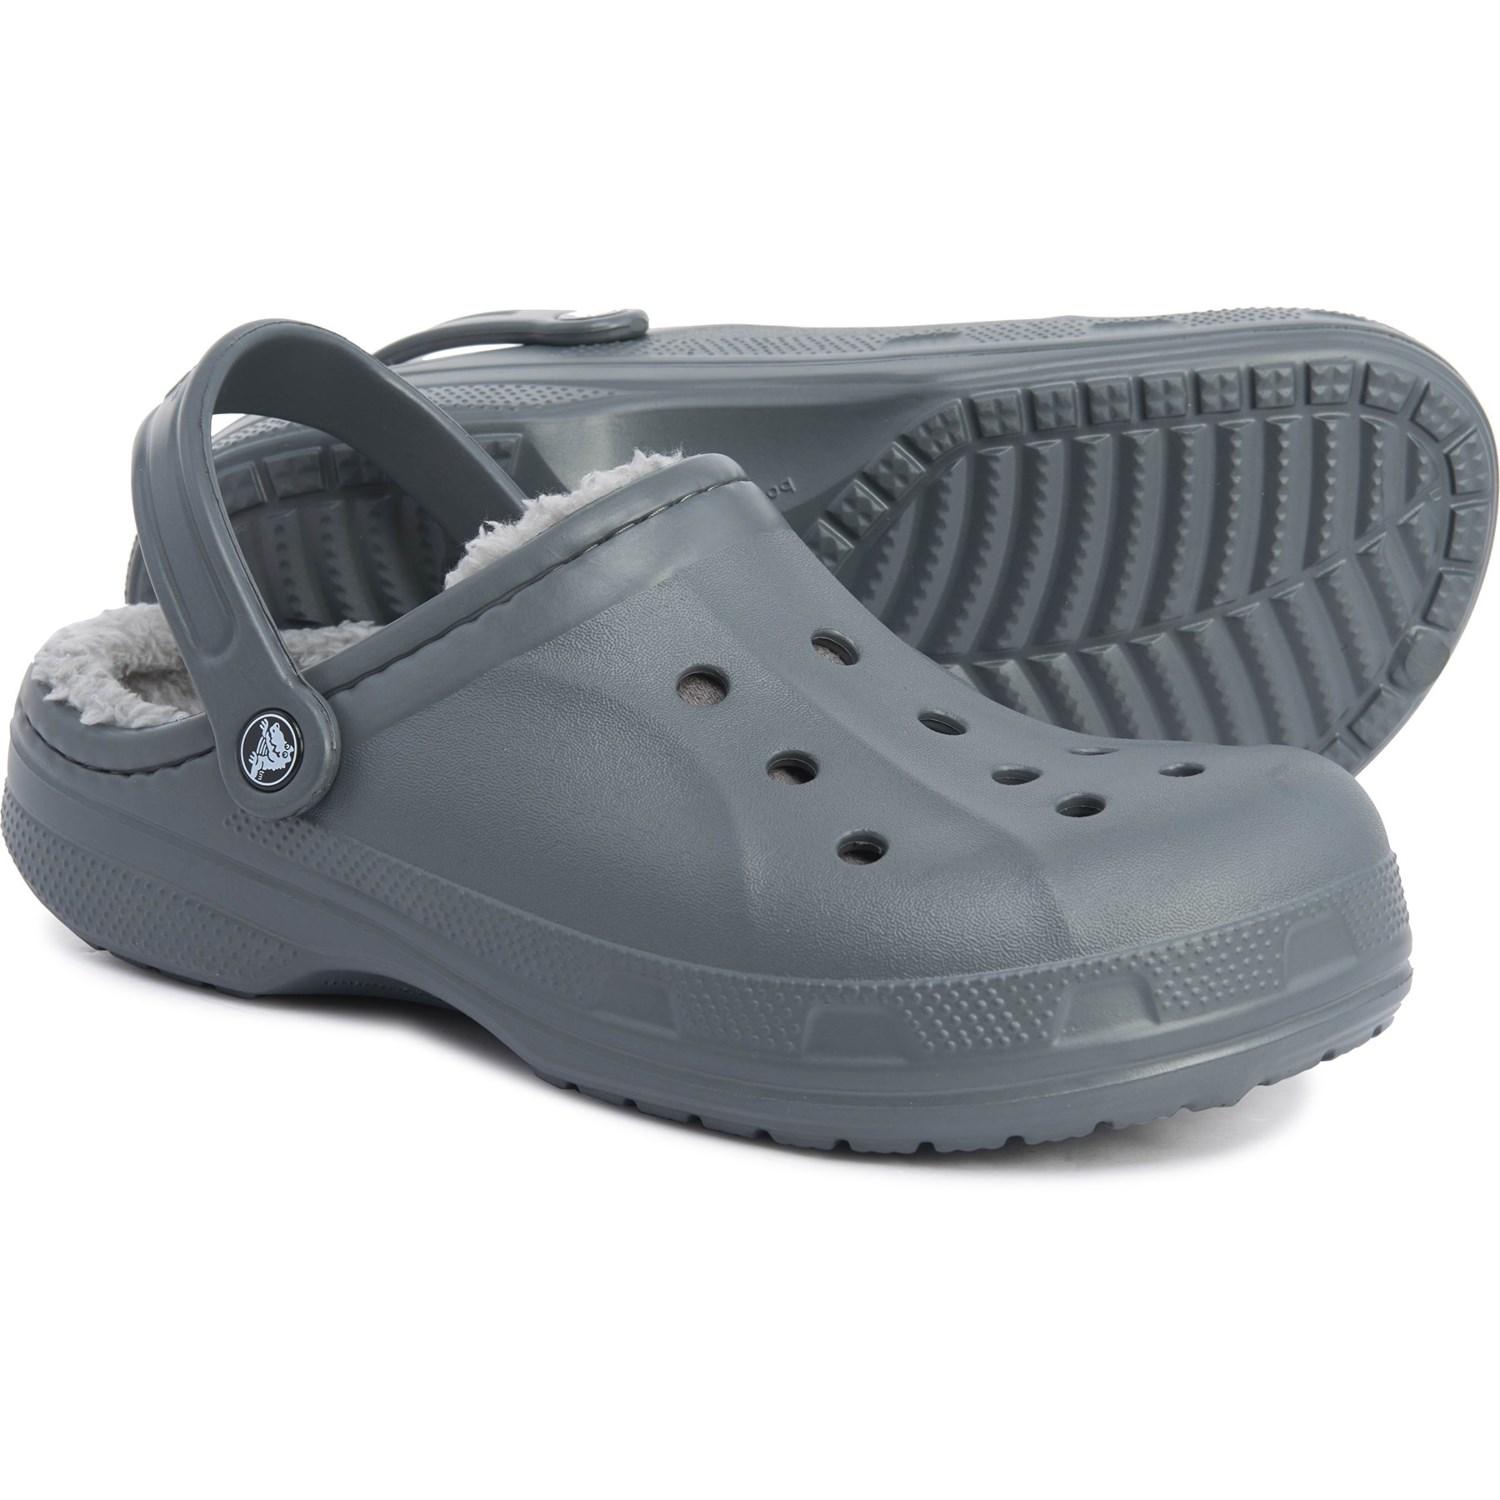 grey winter crocs Online shopping has 